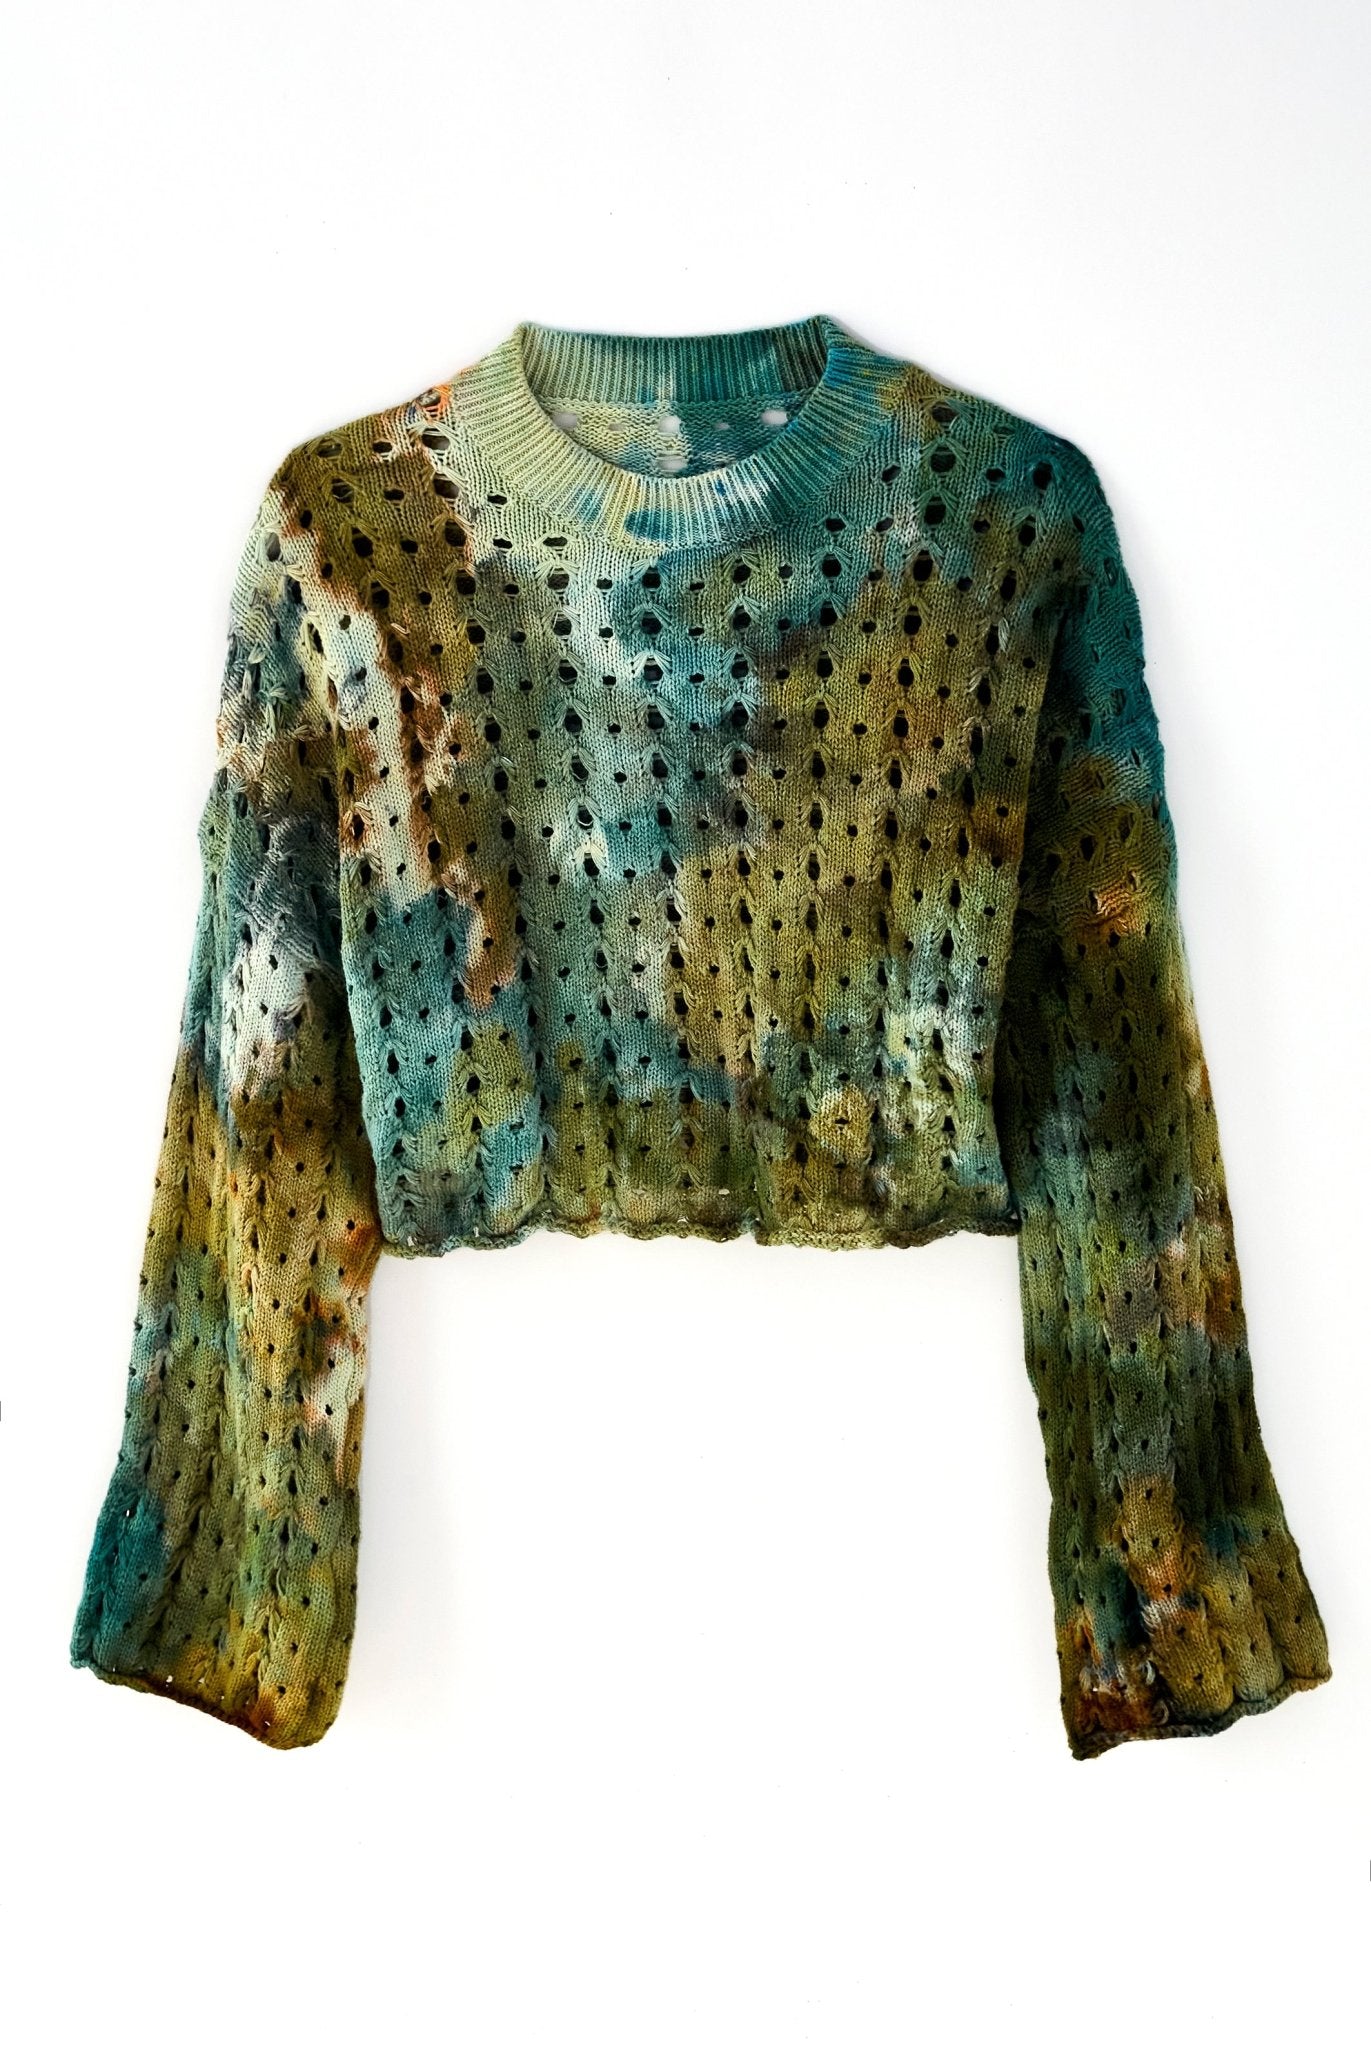 Cropped Sweater in Canyon - riverside tool & dye